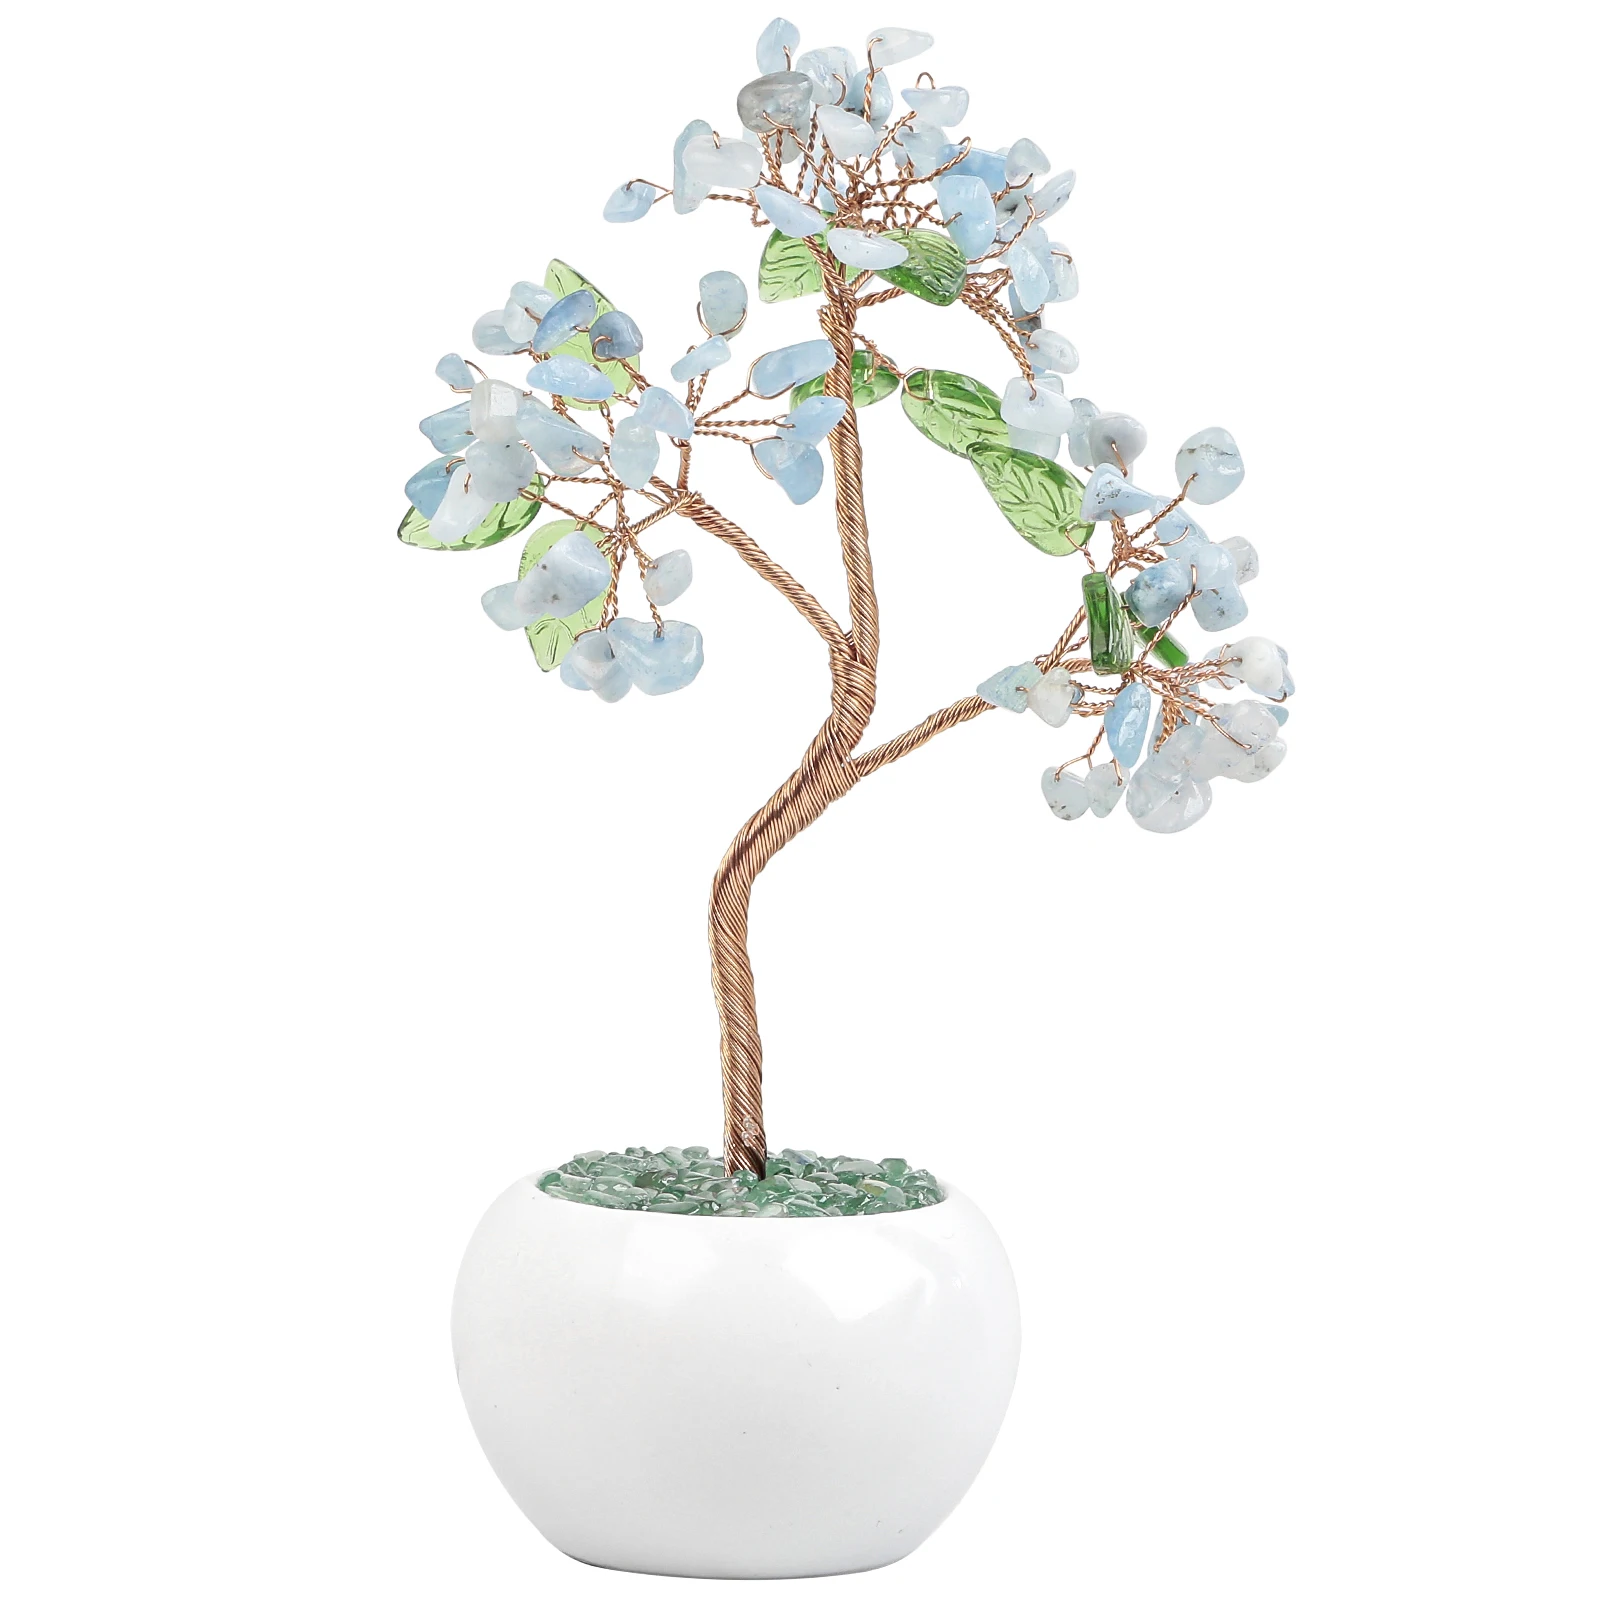 Healing Aquamarine Crystal Money Tree With Ceramic Base Bonsai Lucky Tree Feng Shui Home Decor Desktop Ornaments